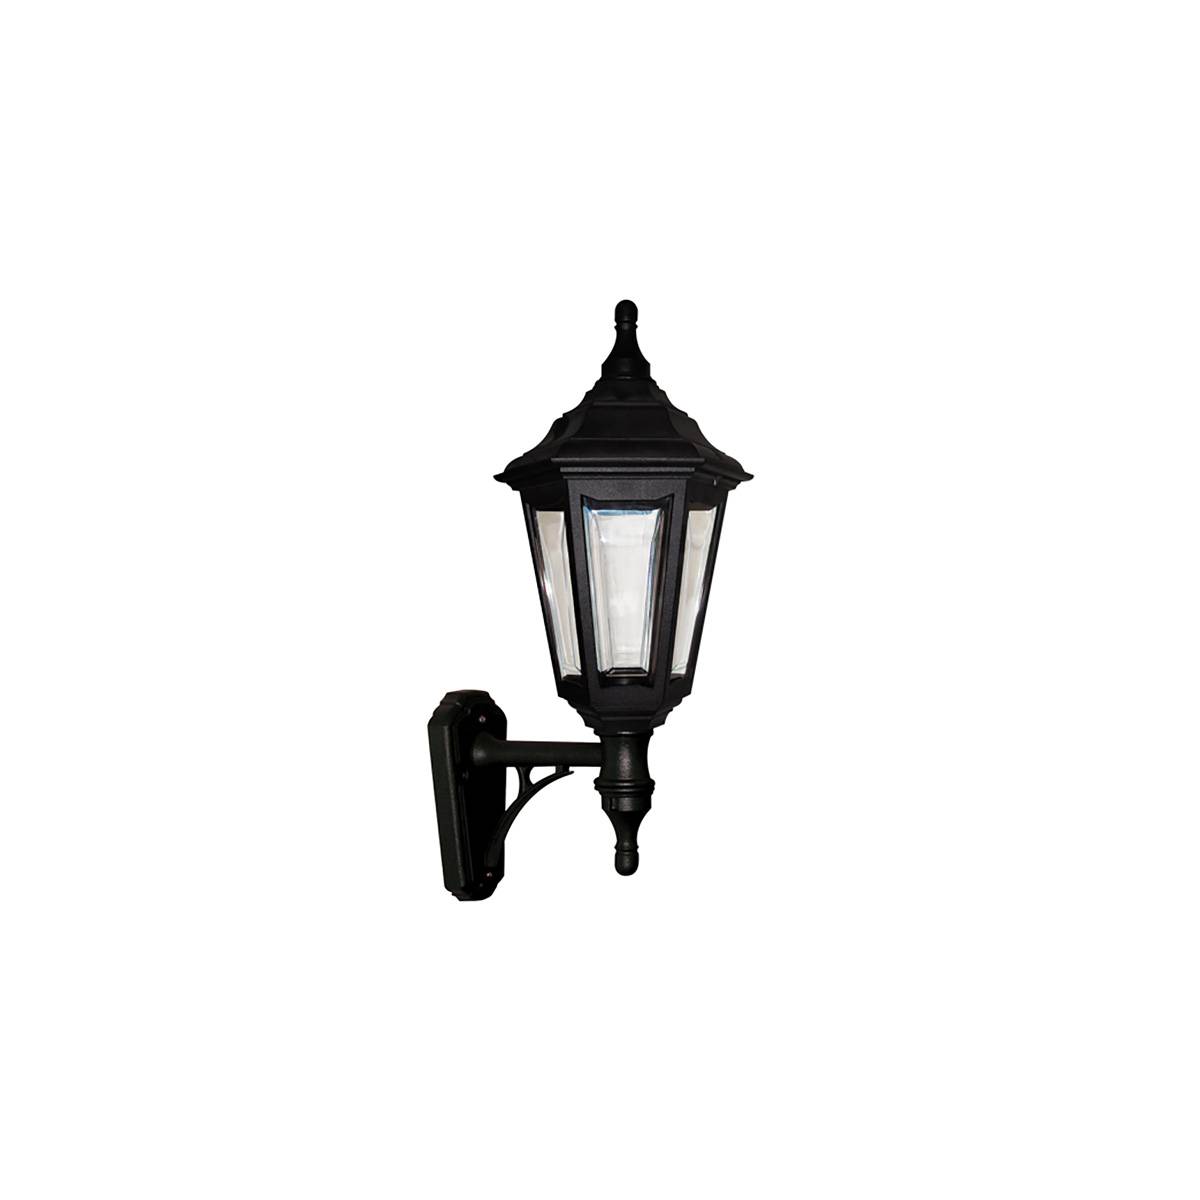 Настенный фонарь KINSALE-WALL. Бренд: Elstead Lighting. Настенные фонари